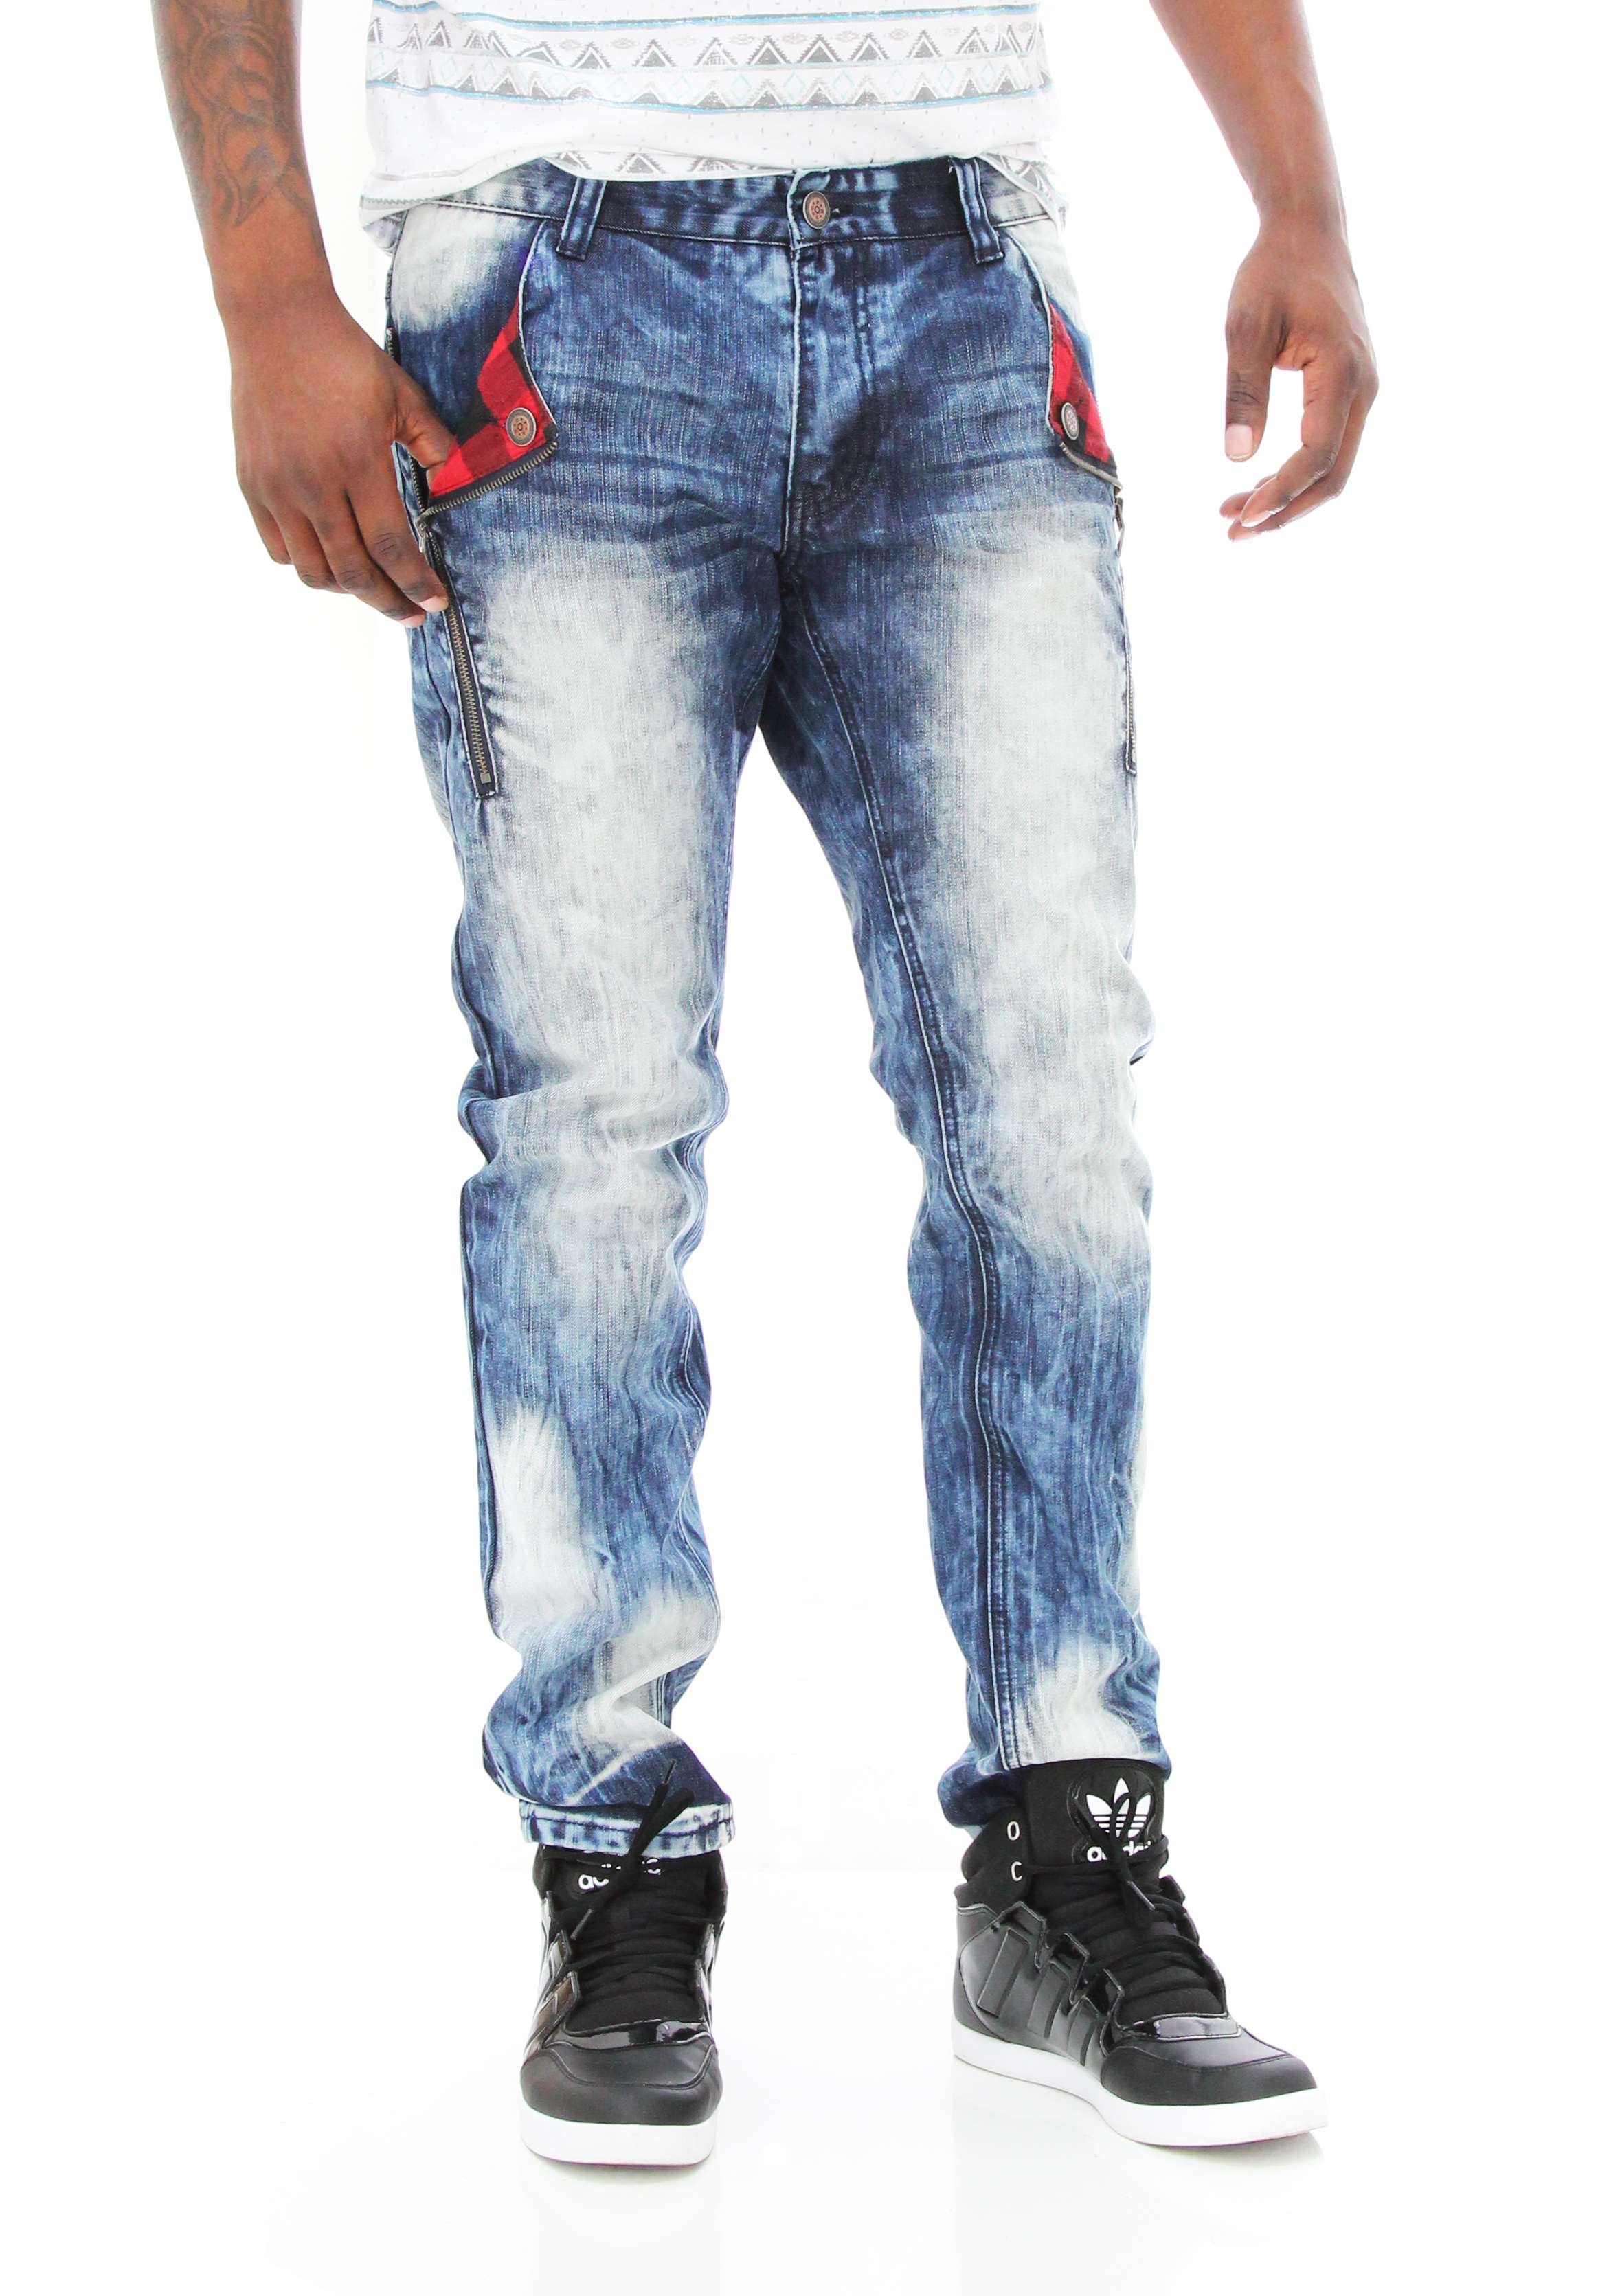 Copper Rivet Men's Tapered Fit Zipper Plaid Pocket Denim Jeans | eBay